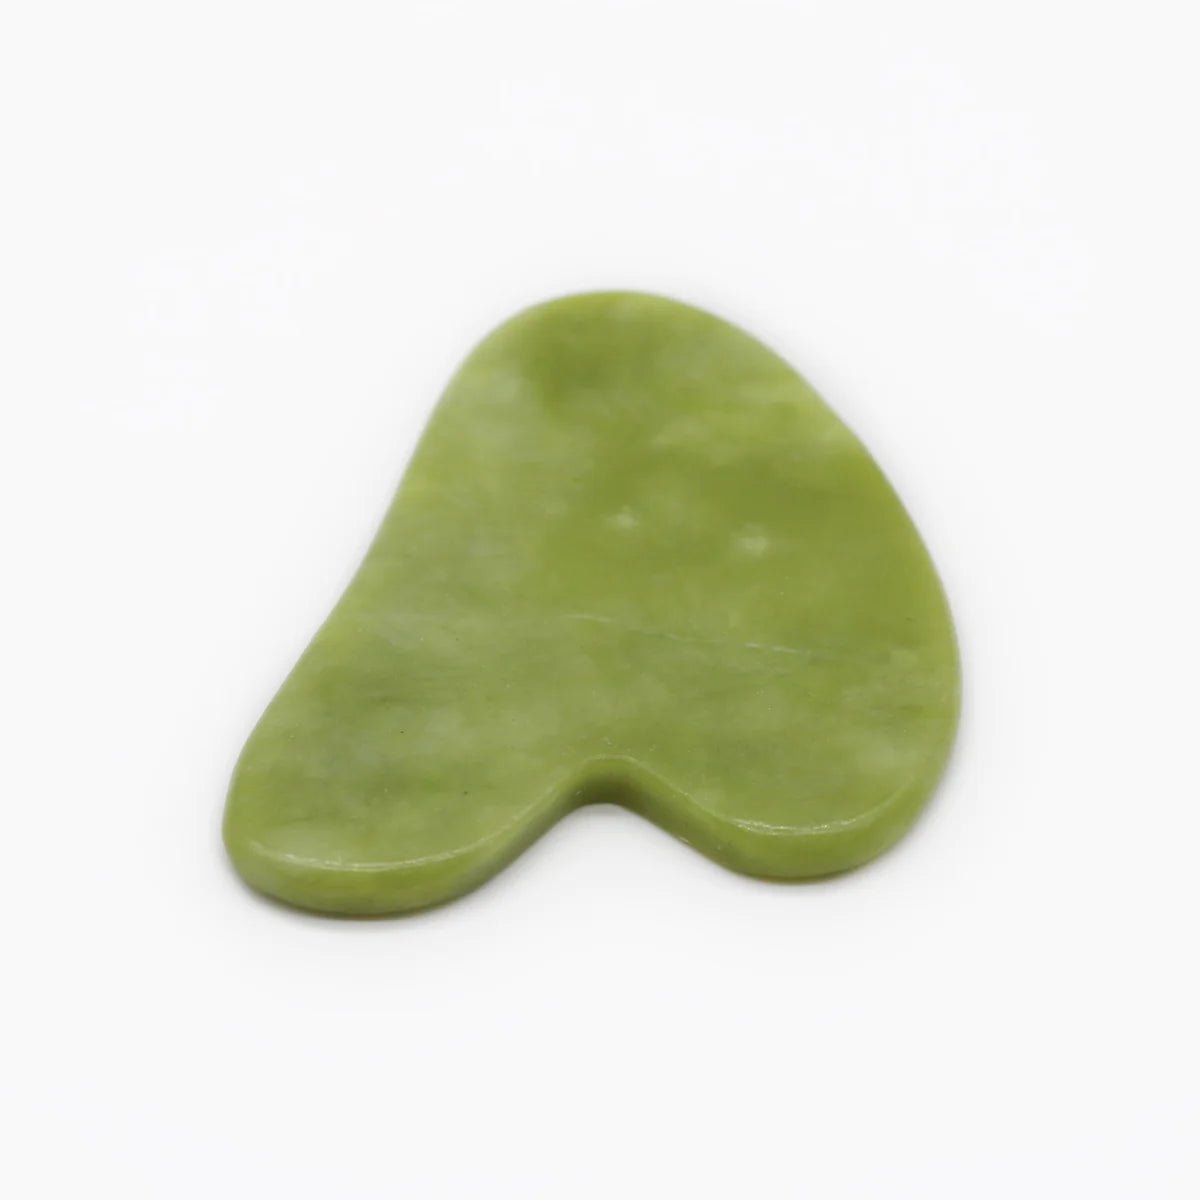 Gua Sha Facial Tool, Jade Green Lymphatic Drainage Facial Massage Tool - Beauty Pro Supplies Canada